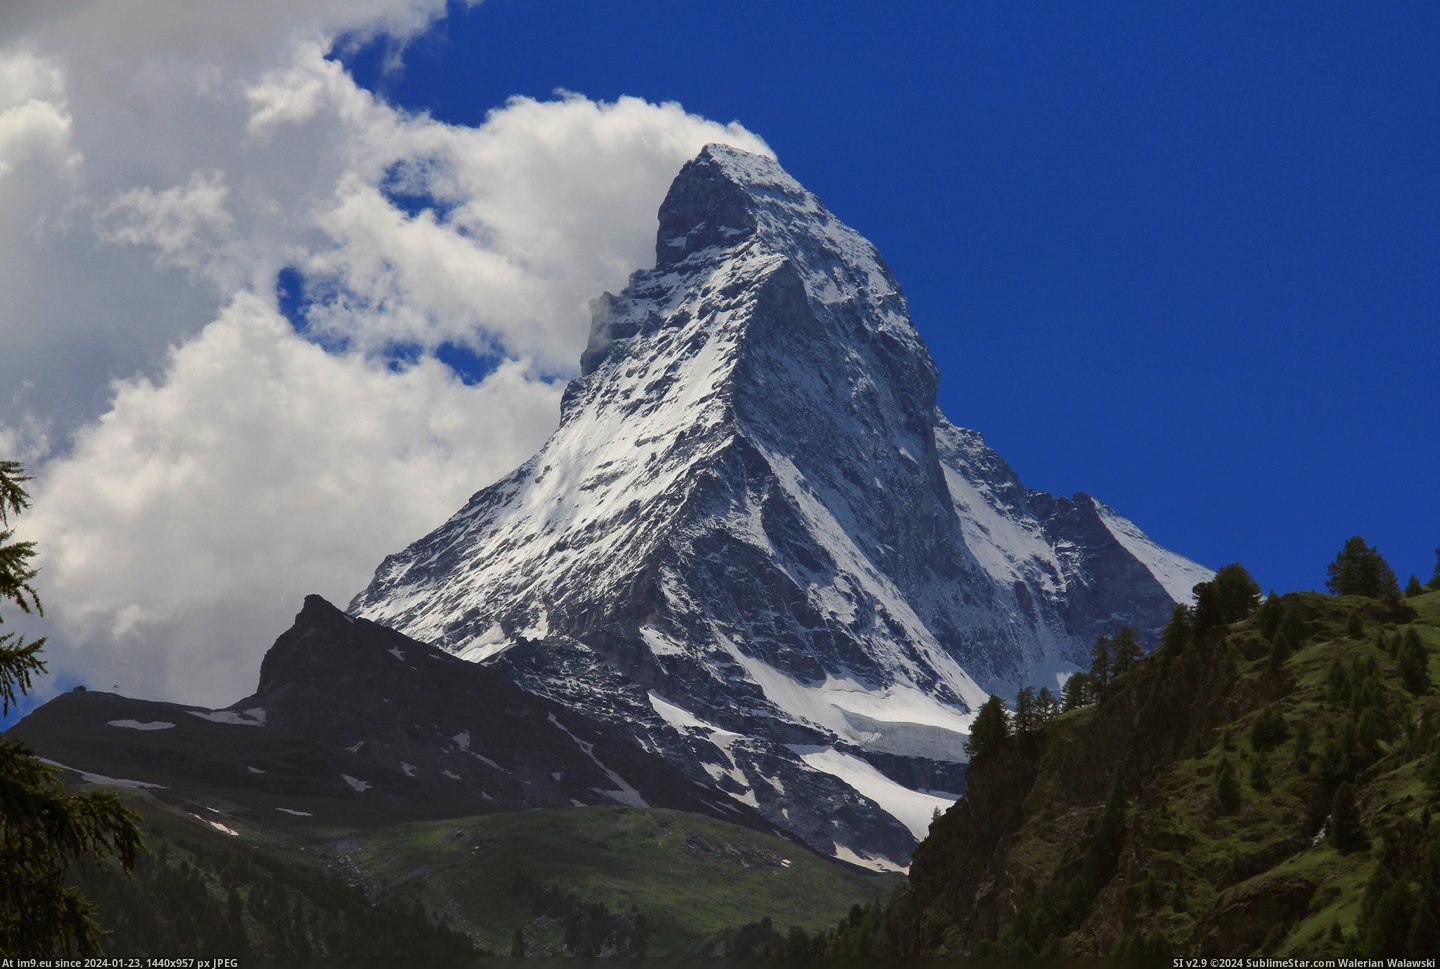 #5184x3456 #Matterhorn #Zermatt #Switzerland [Earthporn] The Matterhorn, from Zermatt, Switzerland. [5184x3456] [OC] Pic. (Изображение из альбом My r/EARTHPORN favs))